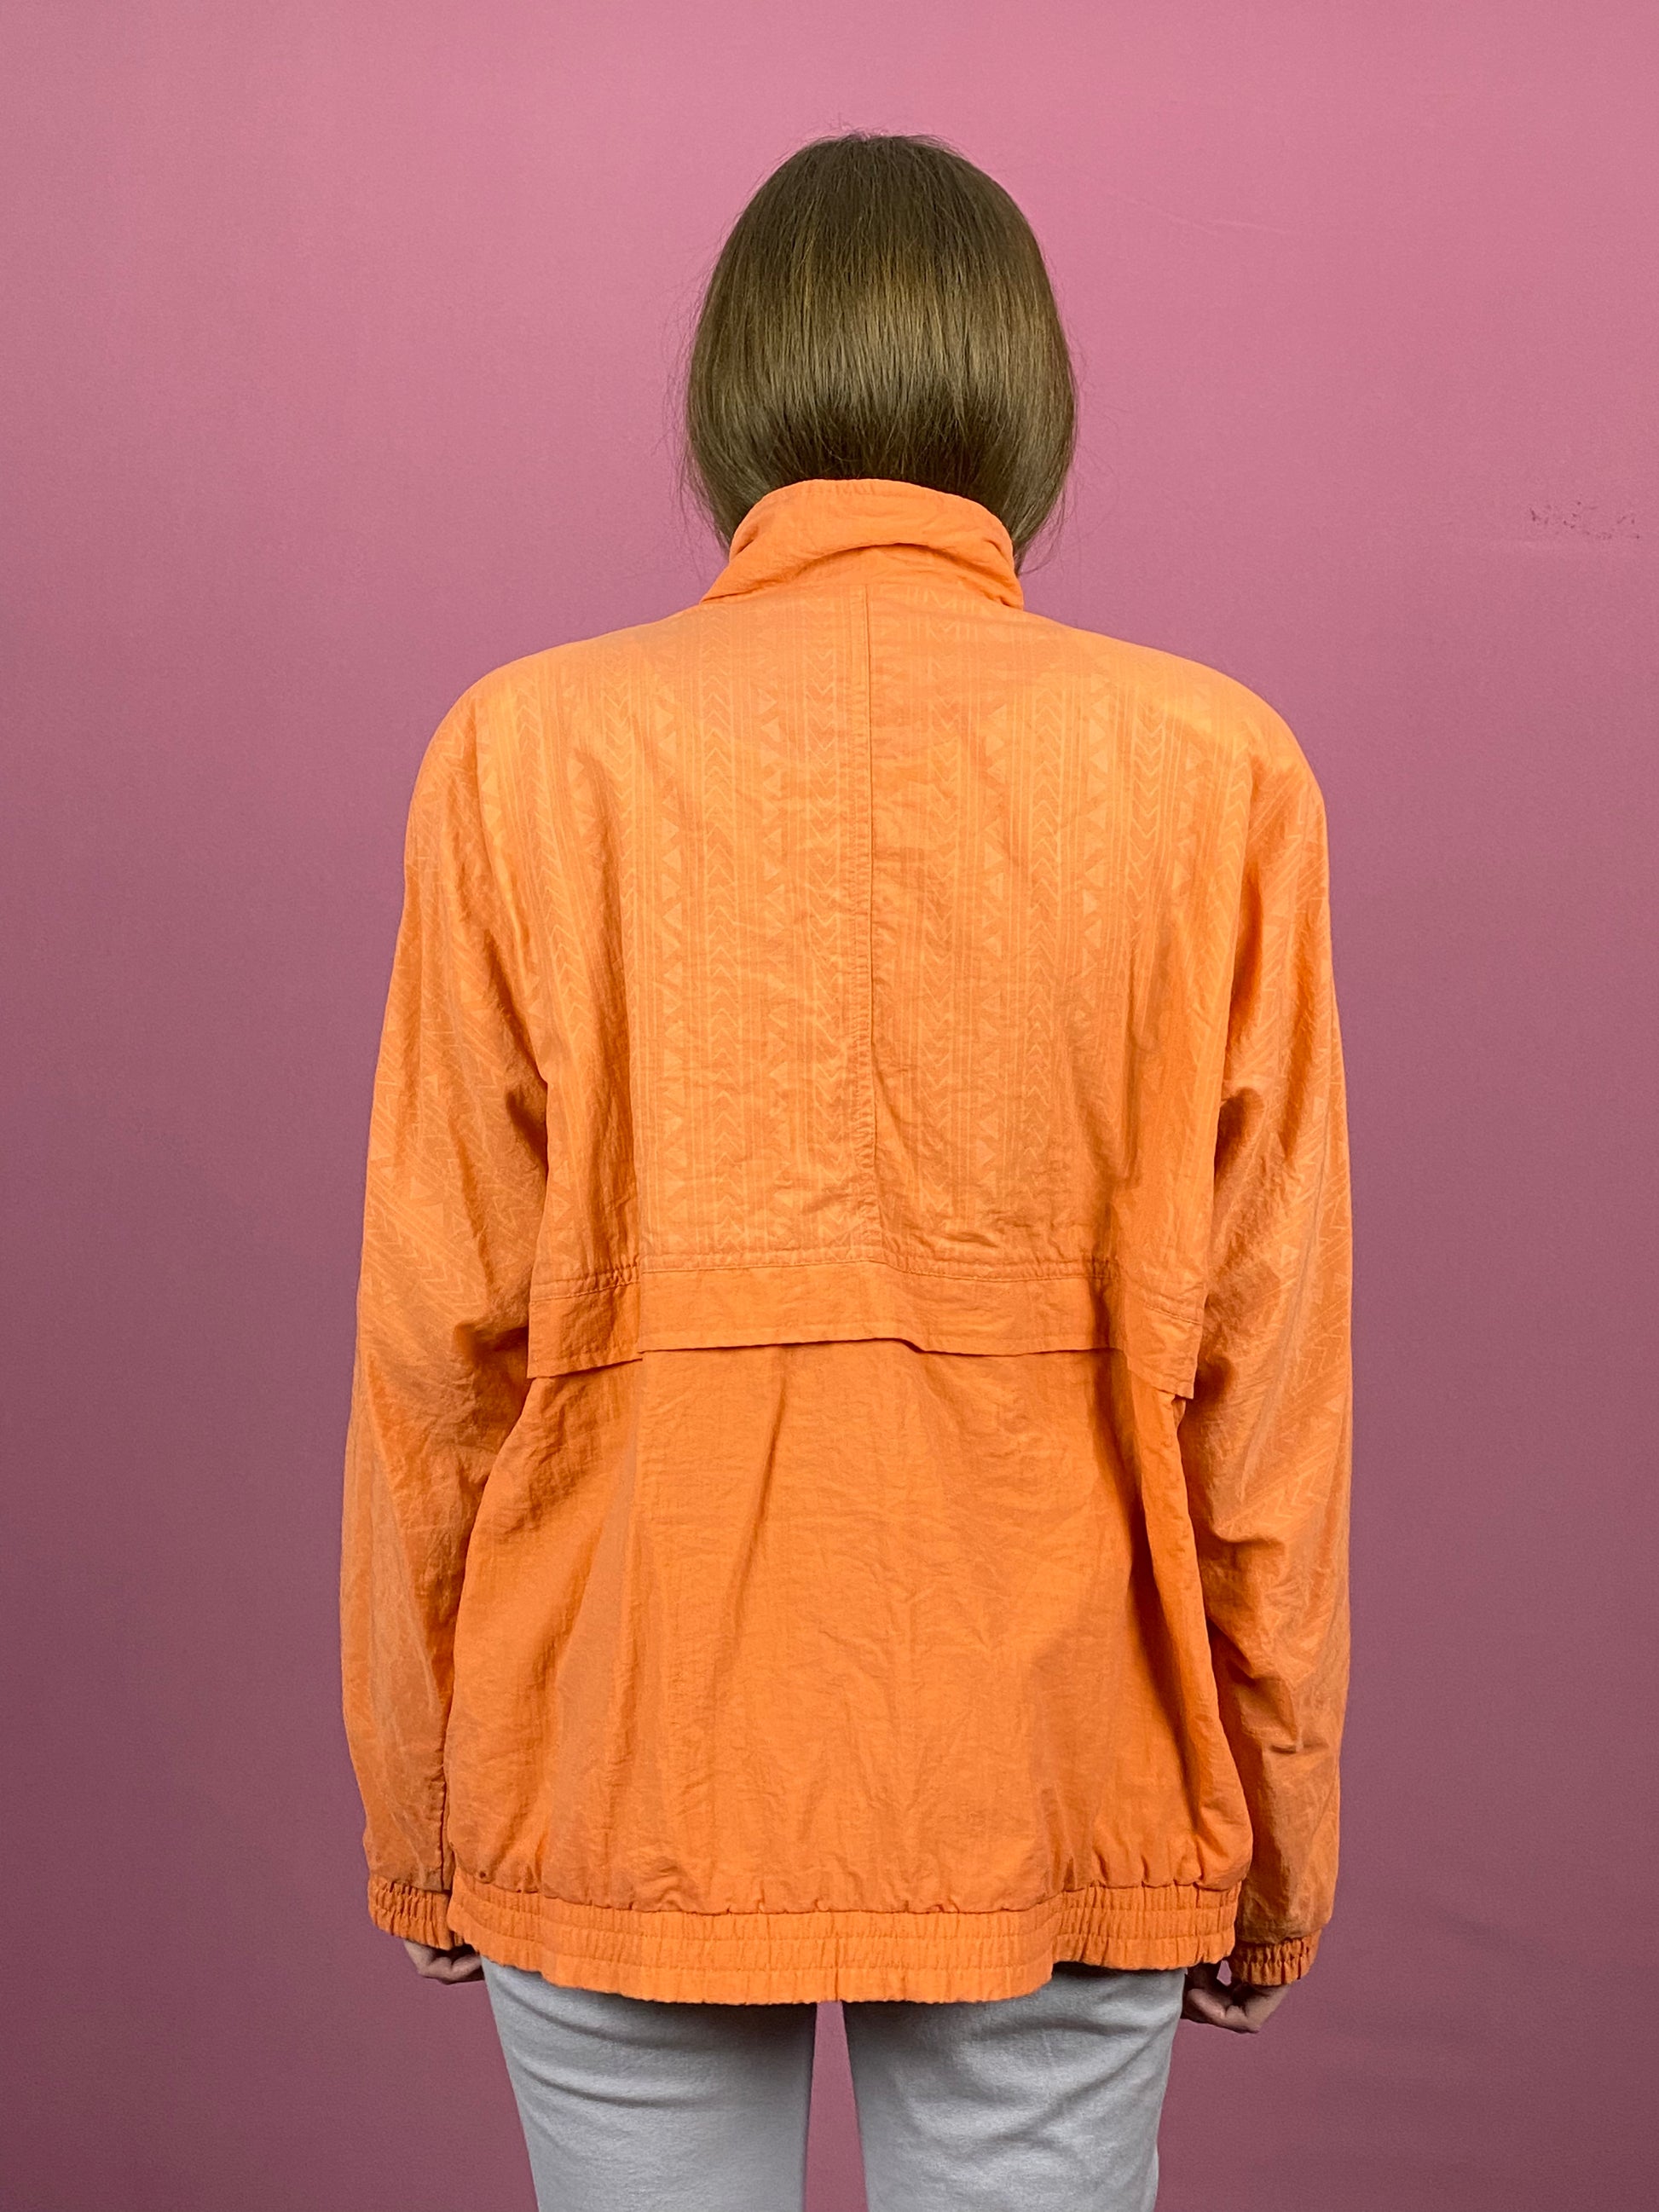 80s Puma Vintage Women's Windbreaker Jacket - Medium Orange Nylon